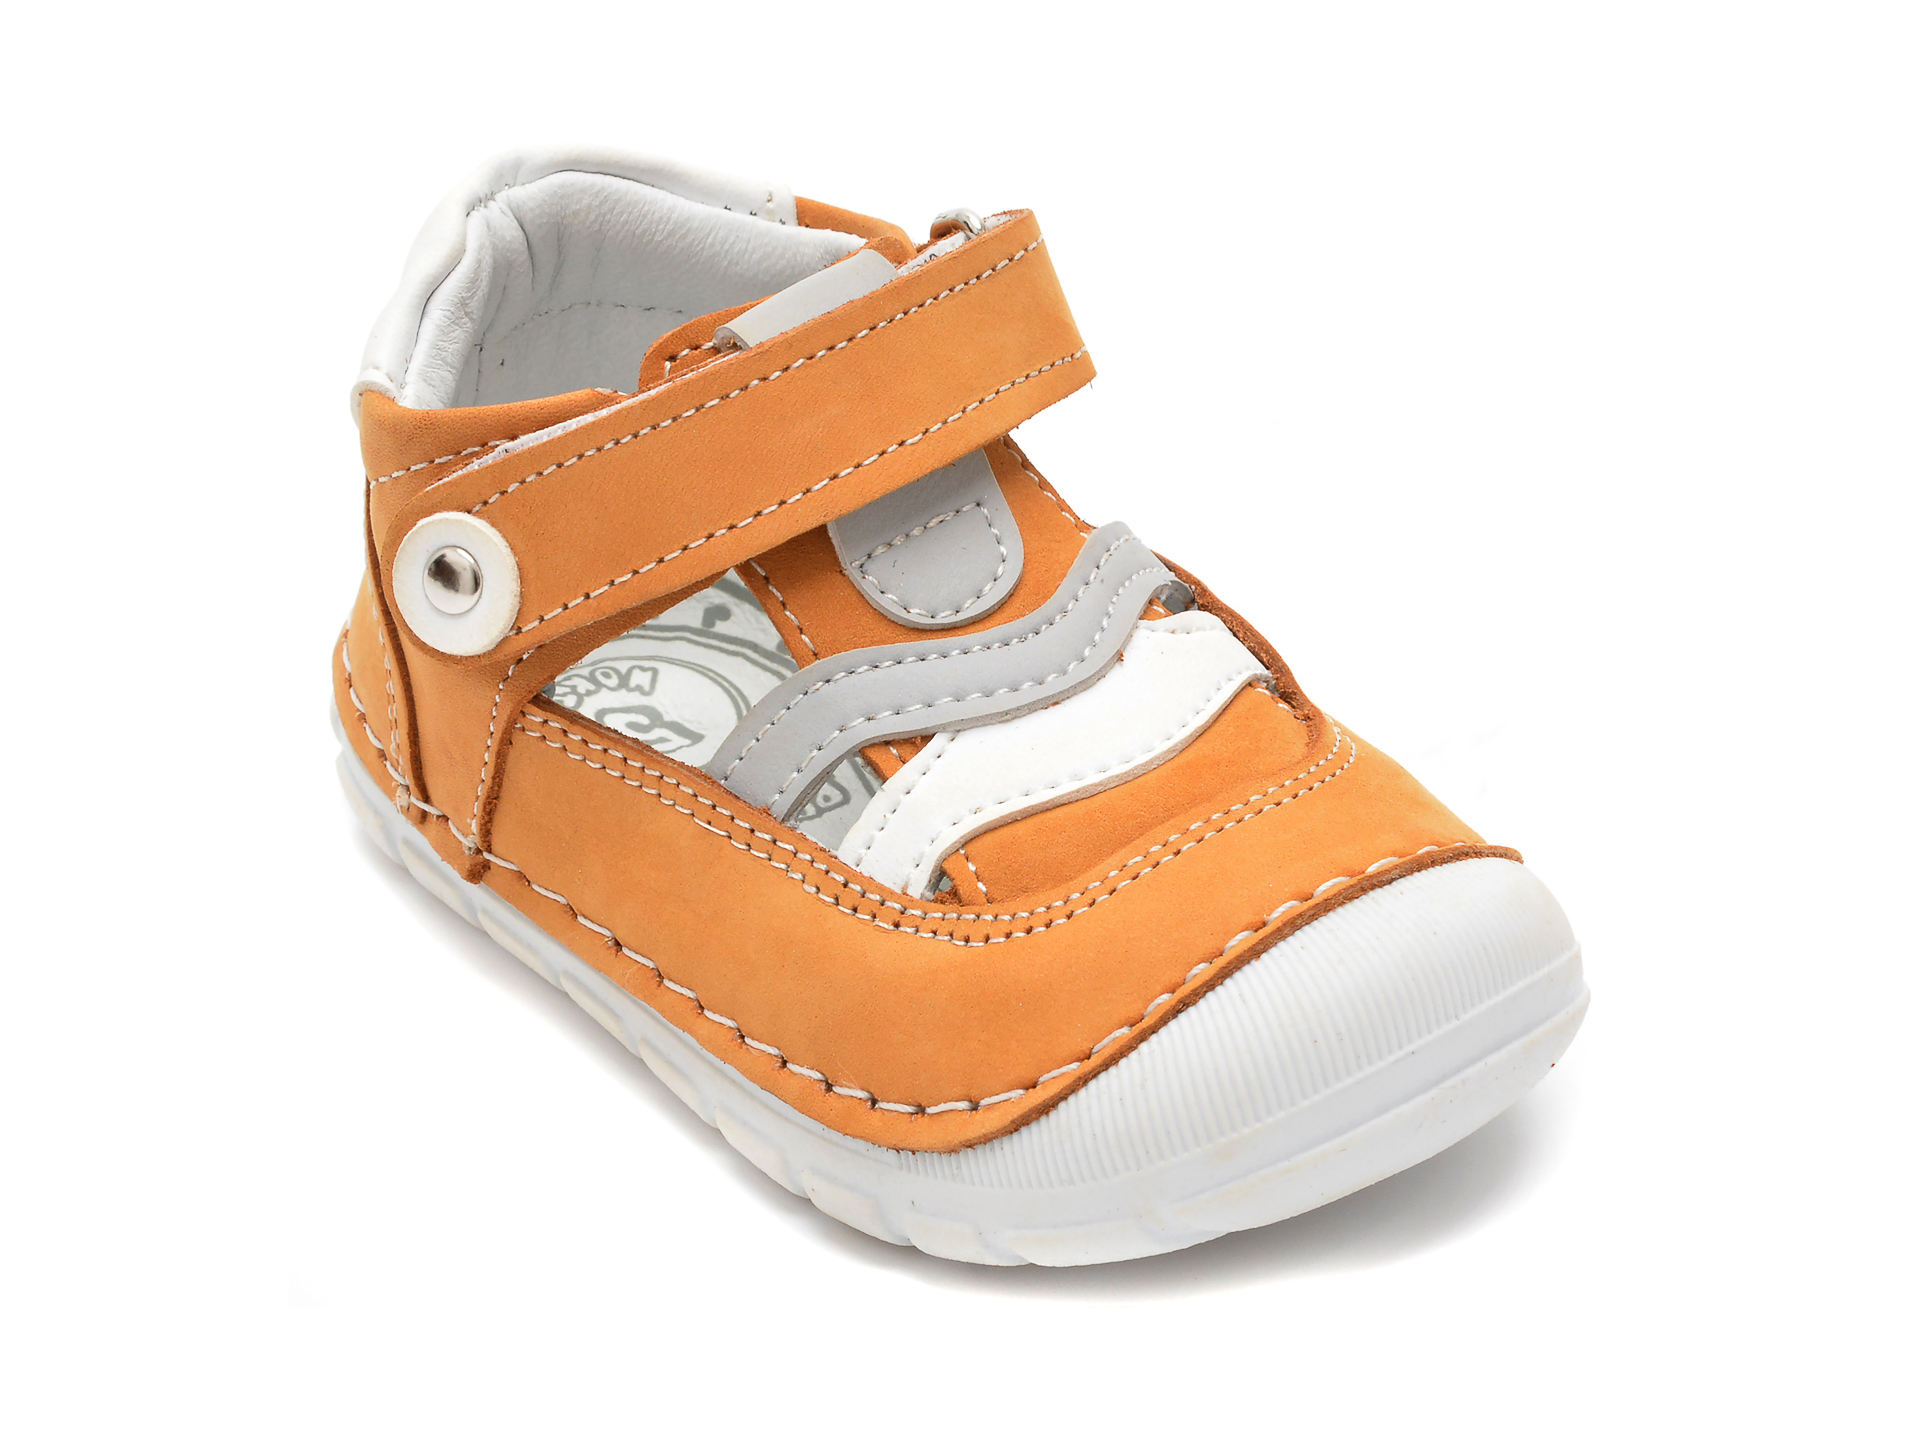 Pantofi POLARIS maro, 520146, din piele naturala /copii/incaltaminte